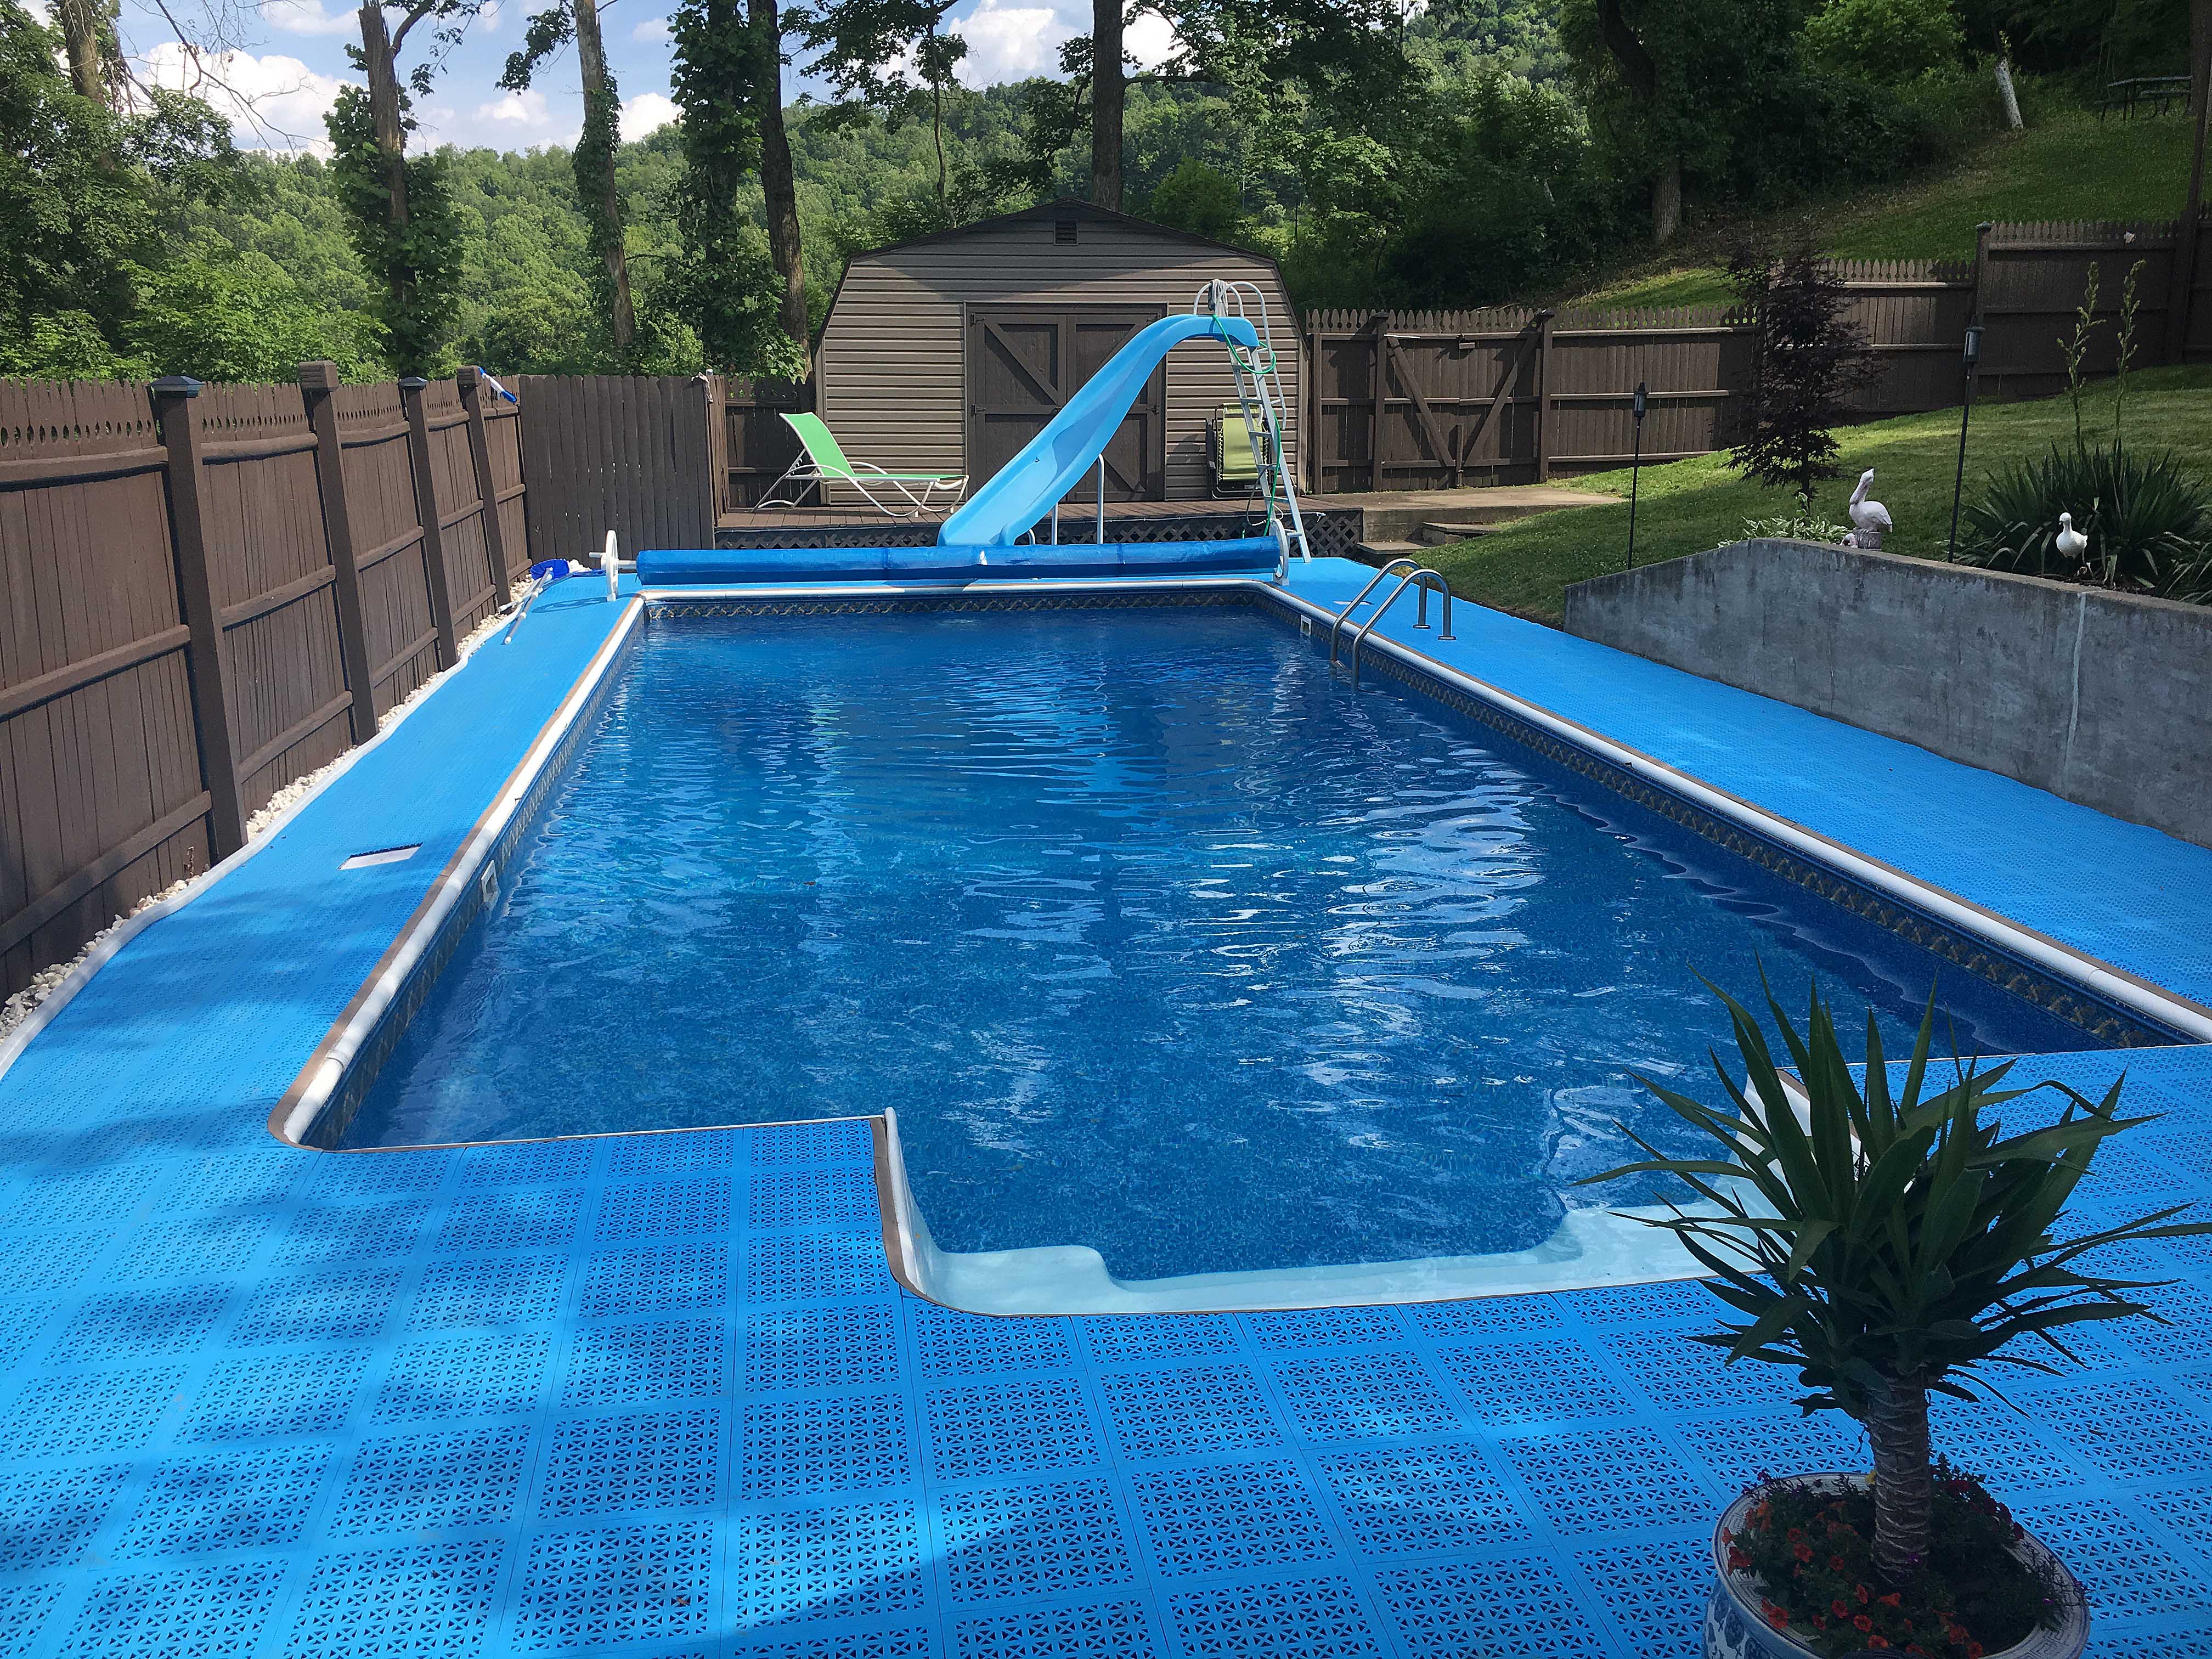 DIY pool deck surfacing ideas